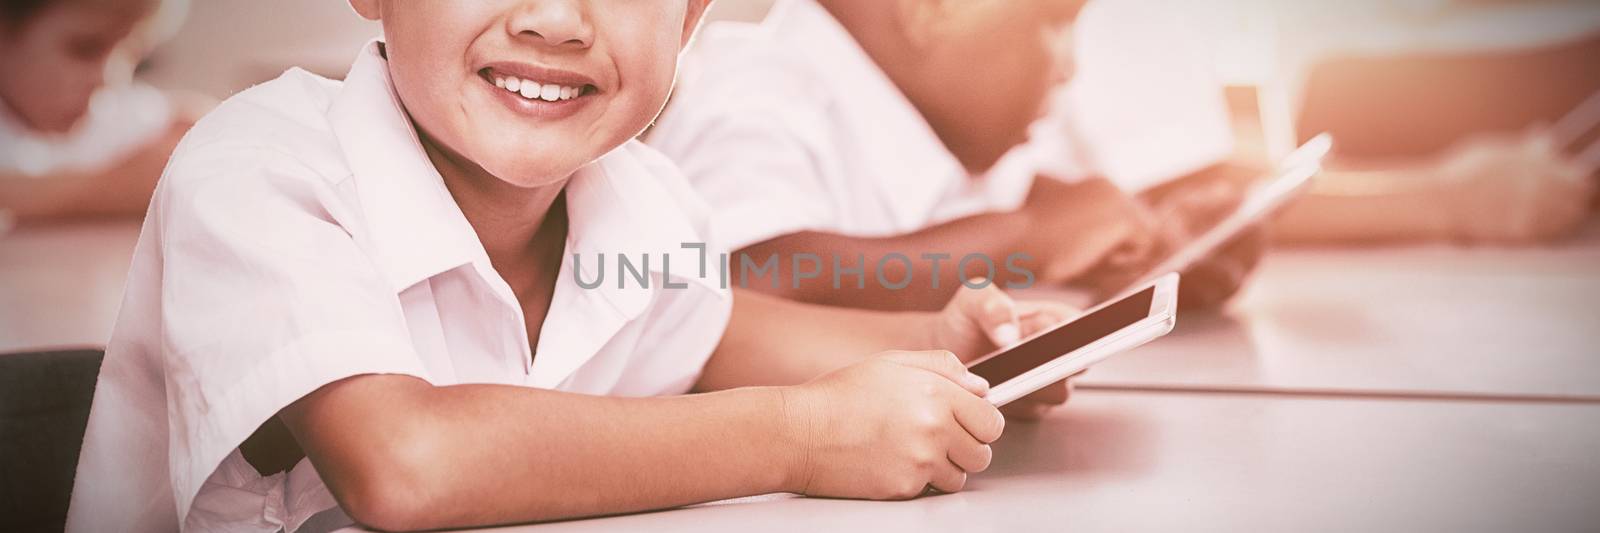 School kids using mobile phone in classroom by Wavebreakmedia